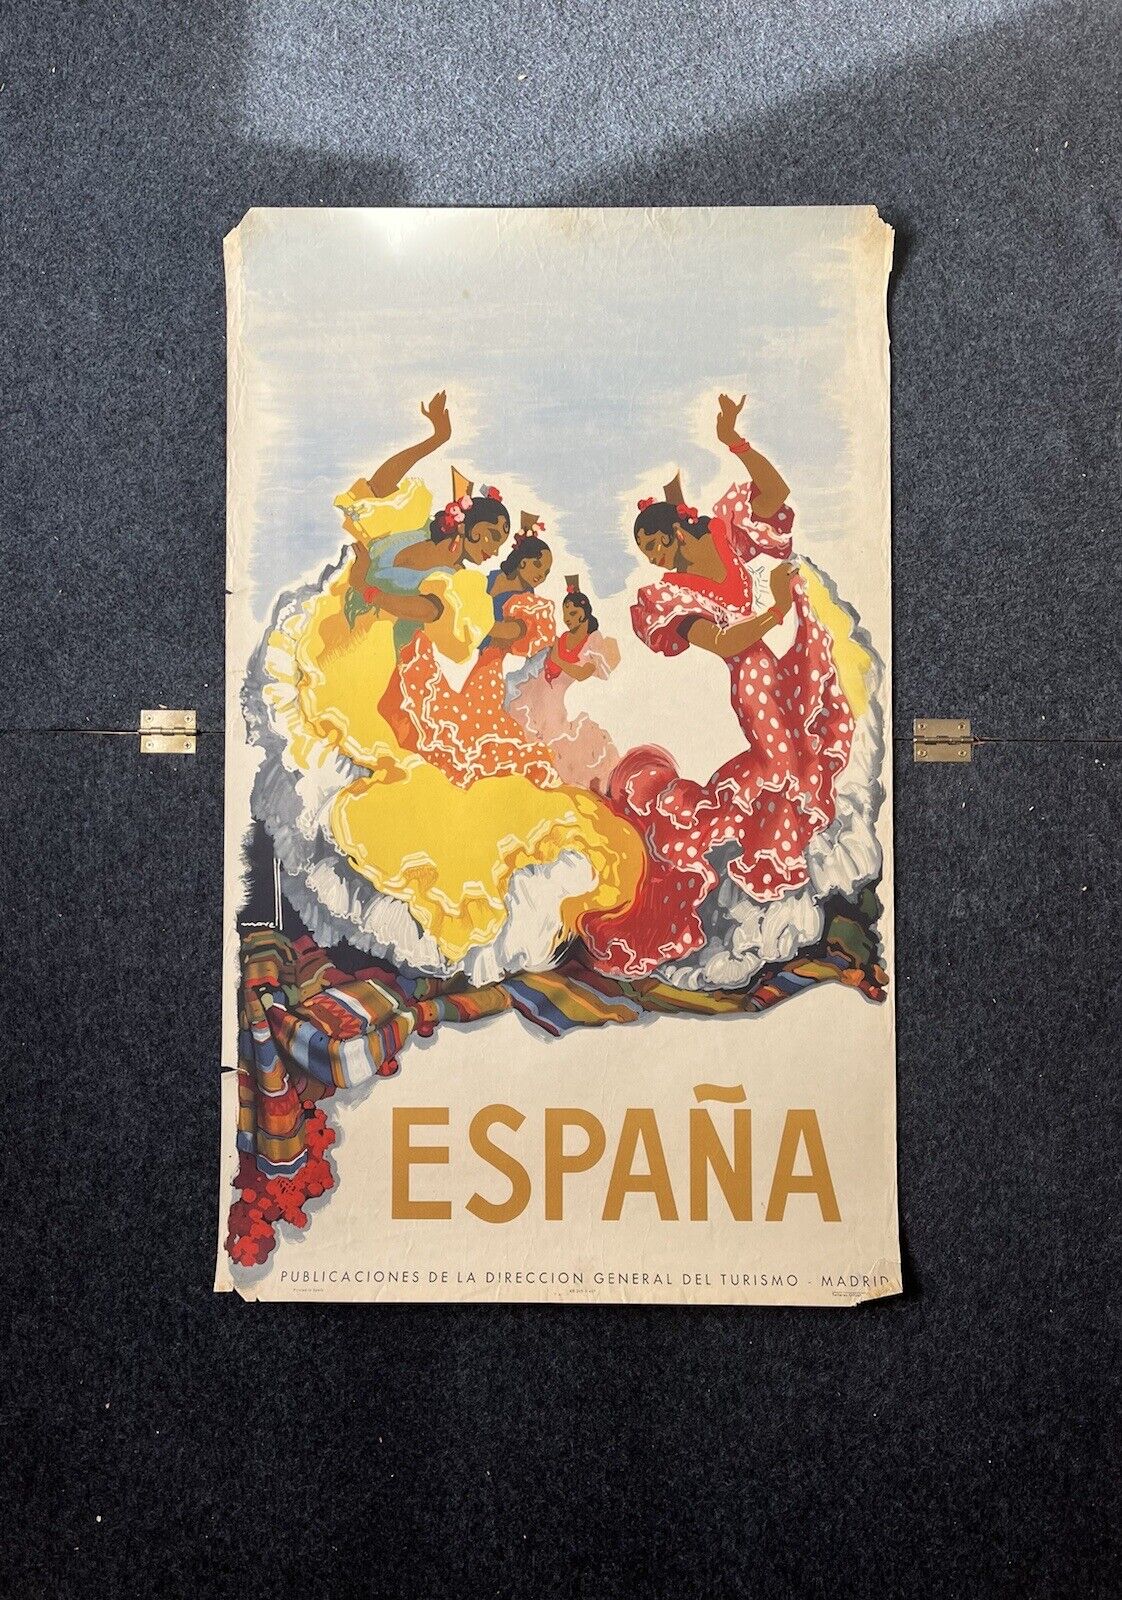 Vintage Original 1950's Spain Travel Poster Airline Tourism